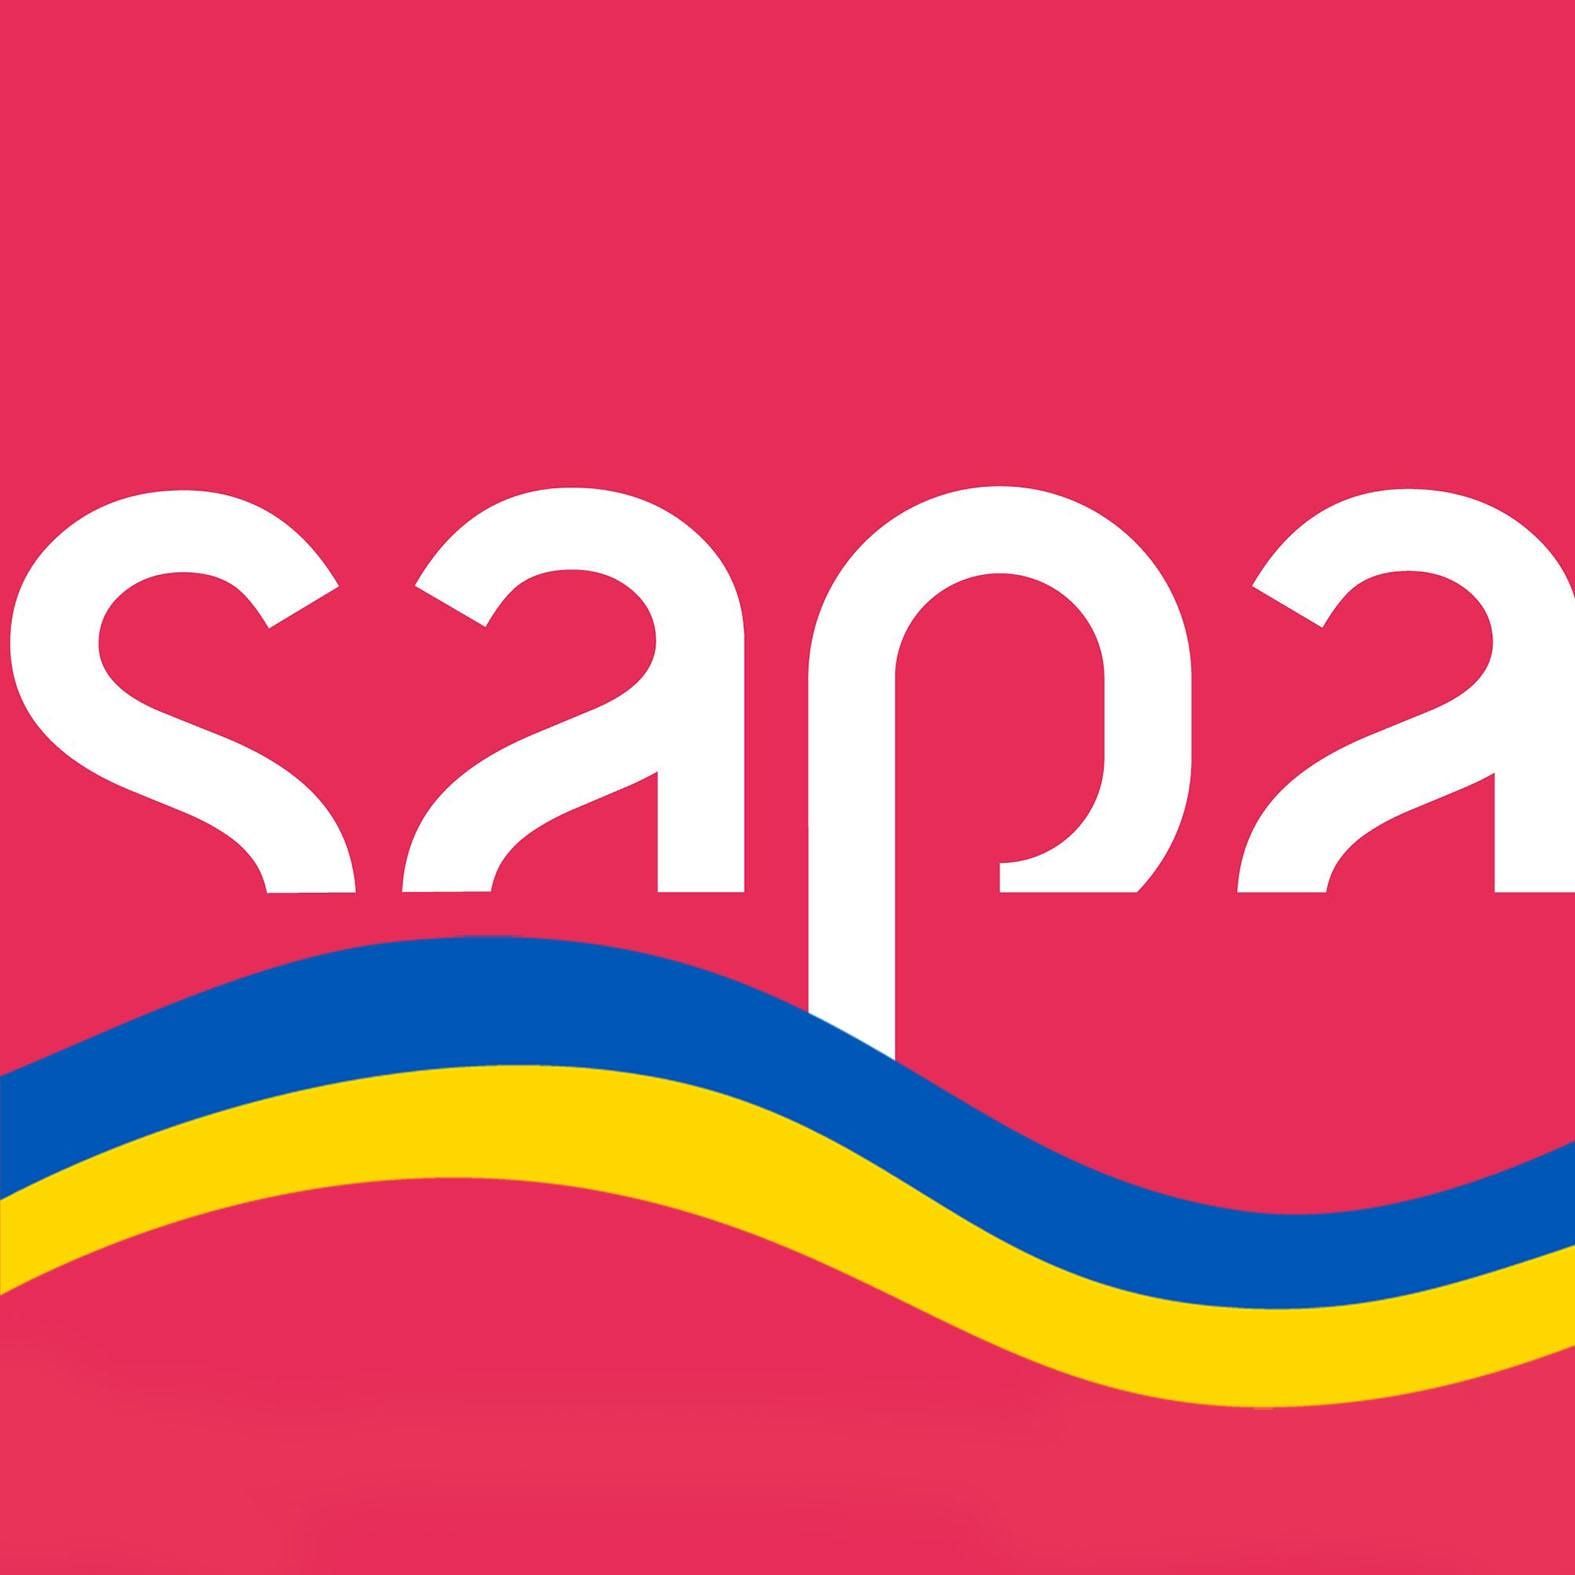 SOPAC logo, Vector Logo of SOPAC brand free download (eps, ai, png, cdr)  formats